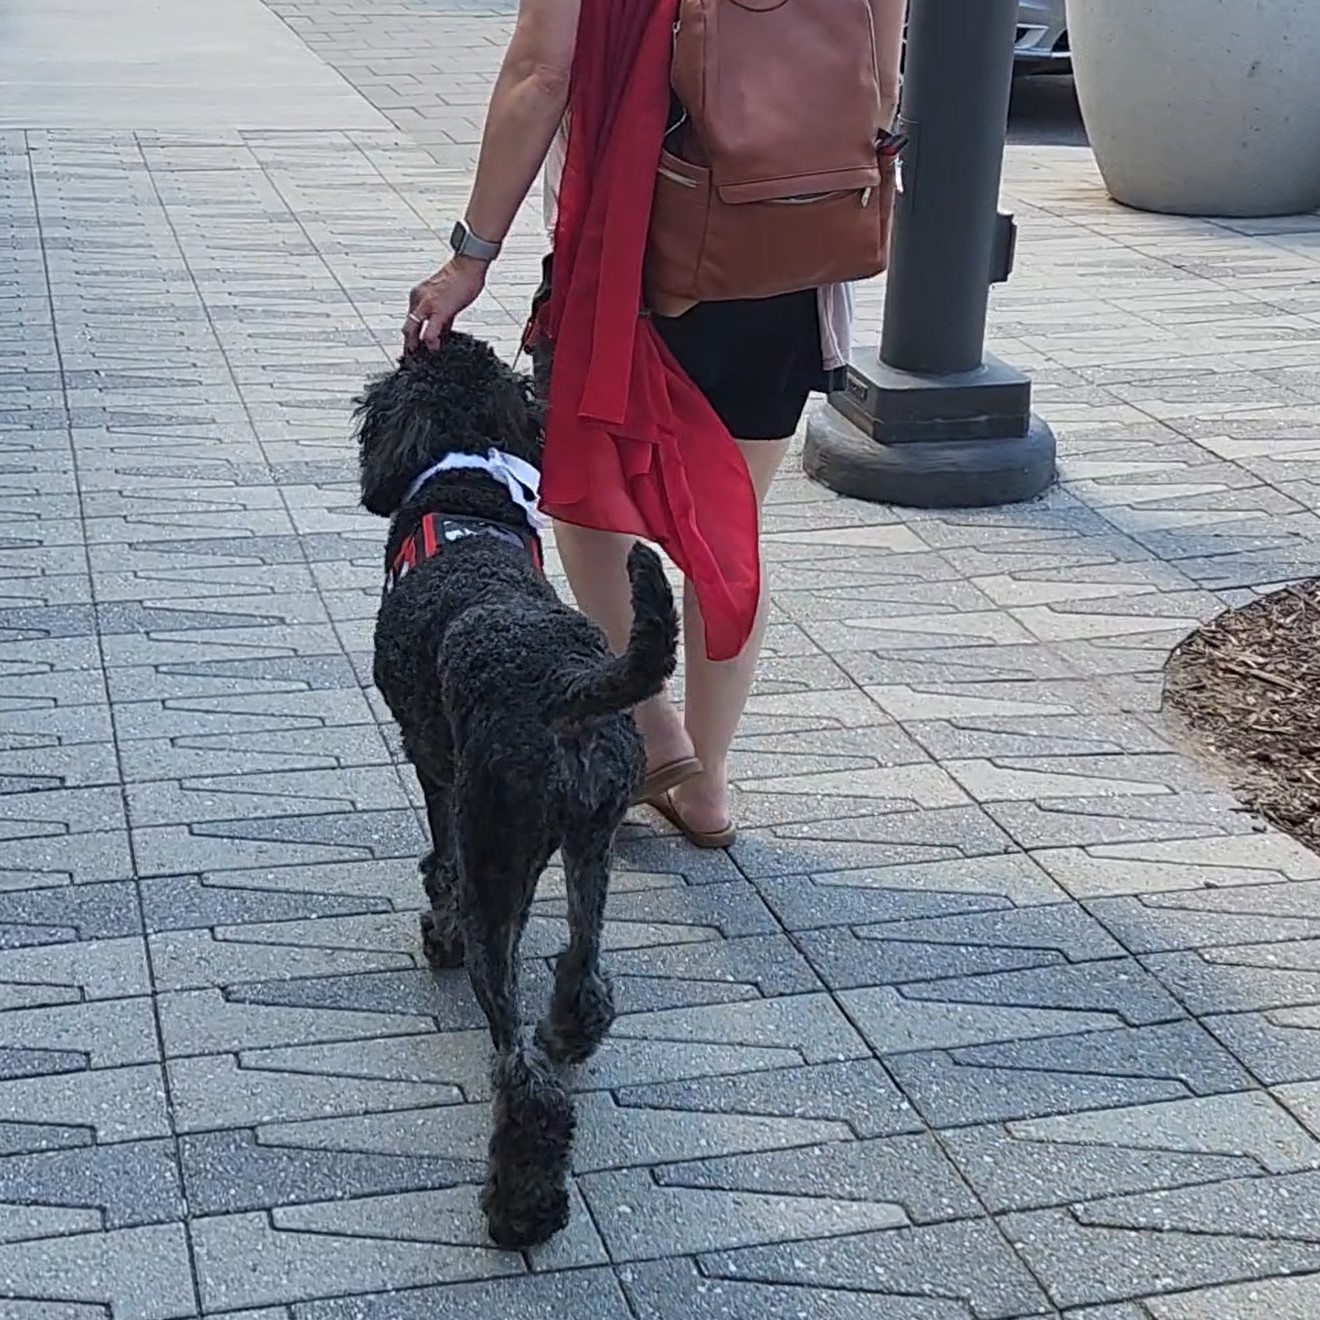 Multipurpose service dog accompanies handler in public access 